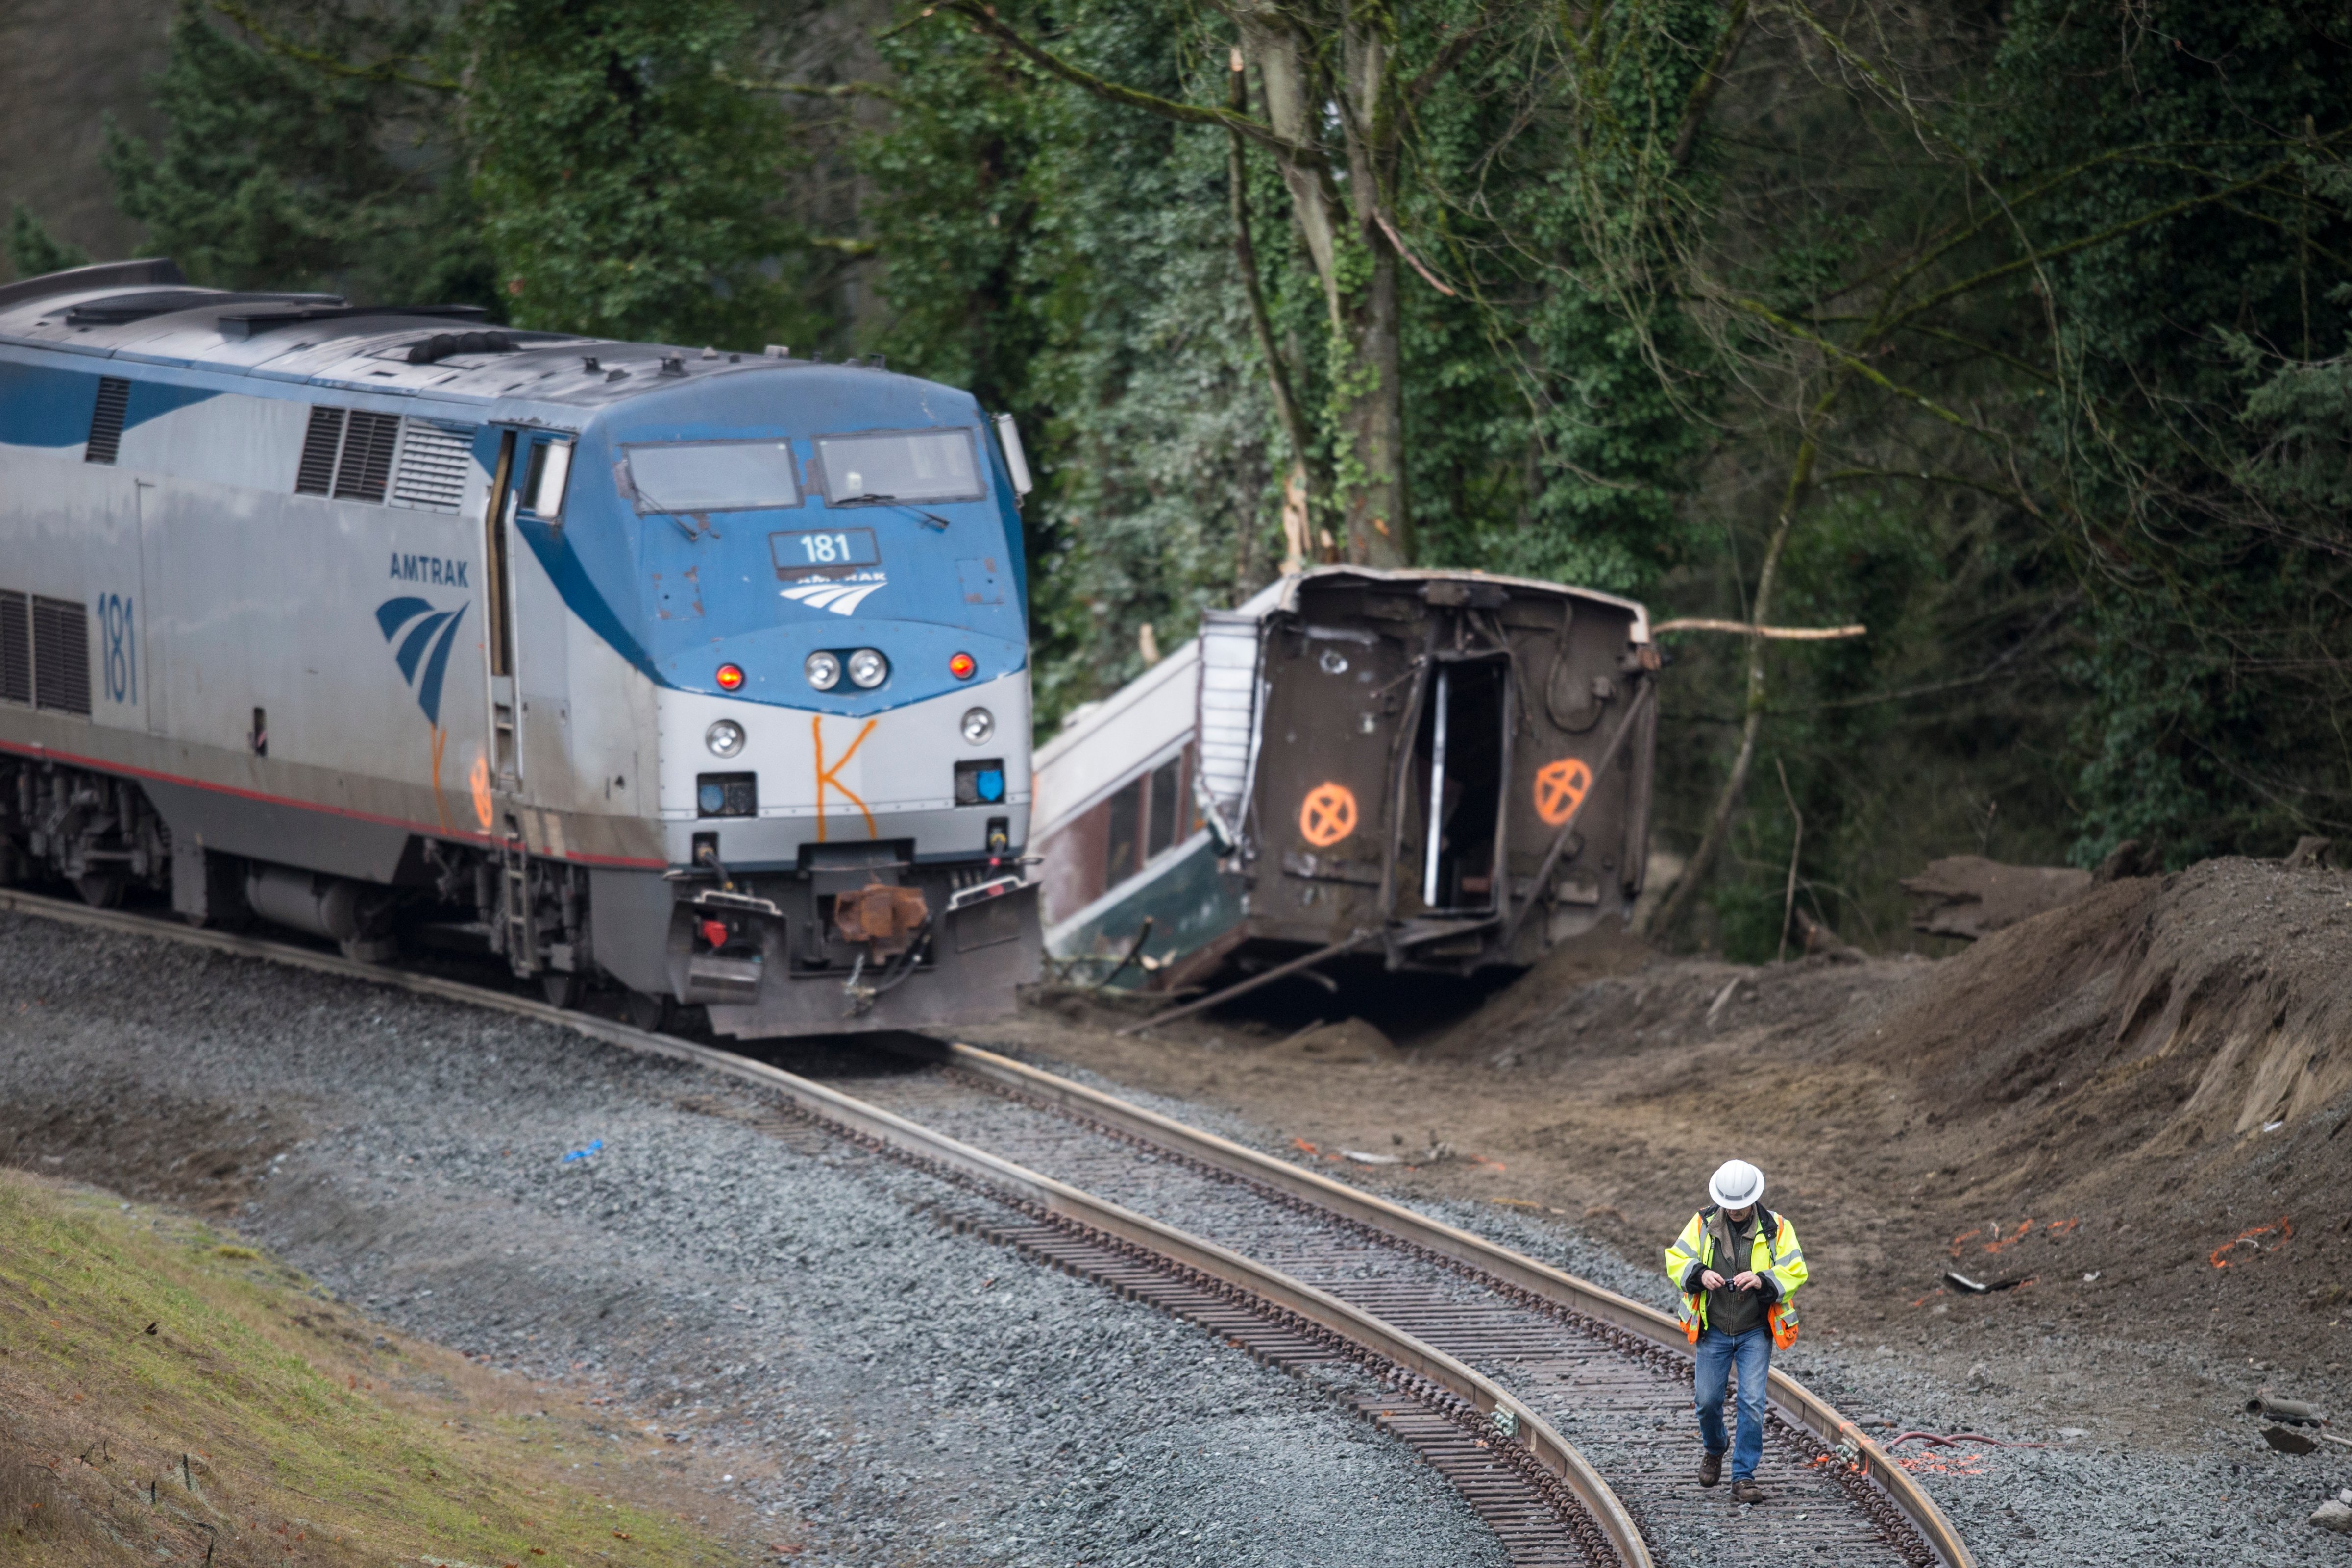 The scene of the Amtrak train derailment on December 18, 2017 in DuPont, Washington. (Stephen Brashear&mdash;Getty Images)